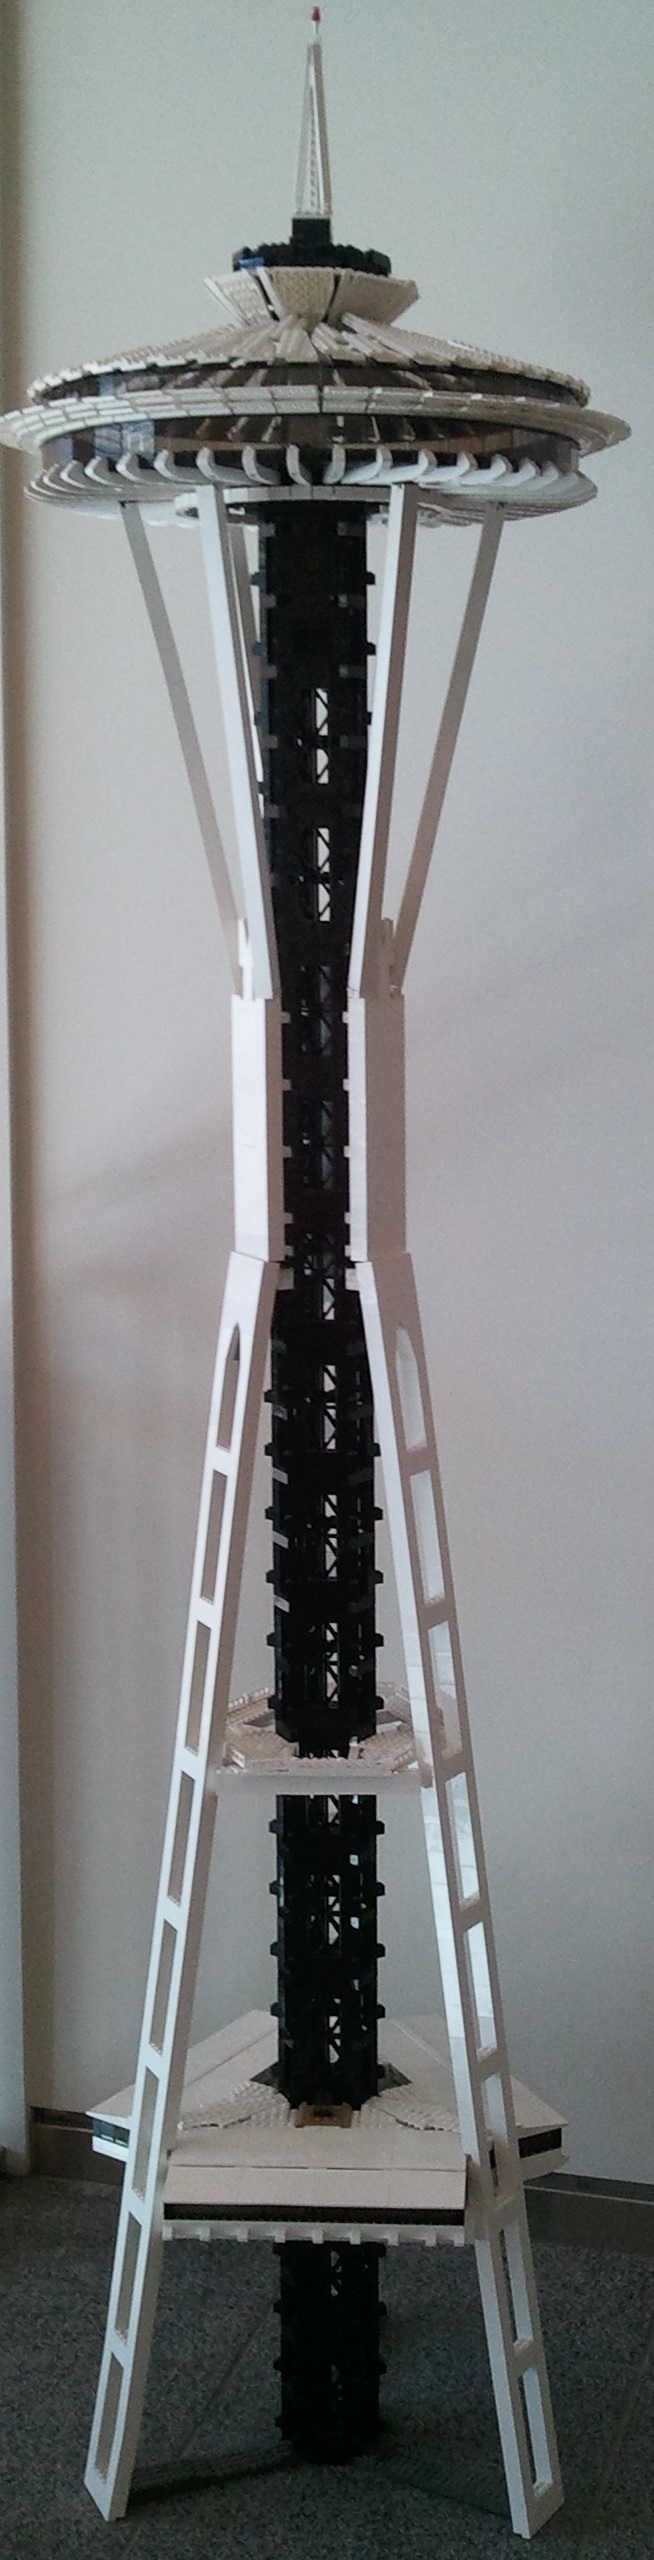 Lego Space Needle